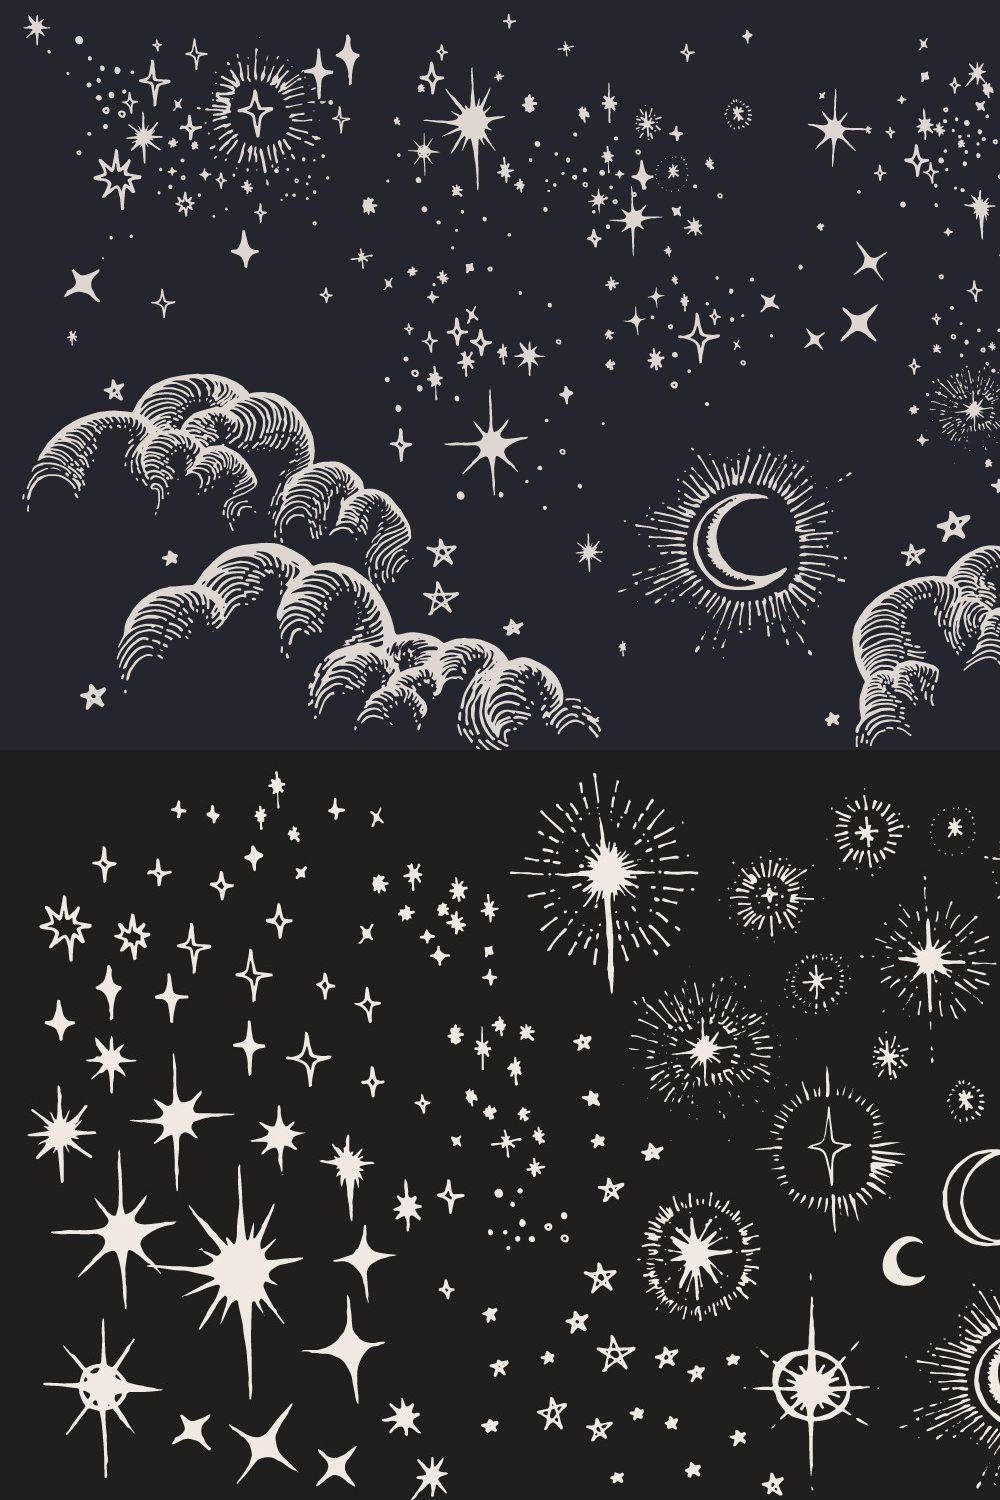 Star, Moon, Cloud, Sky Drawings pinterest preview image.